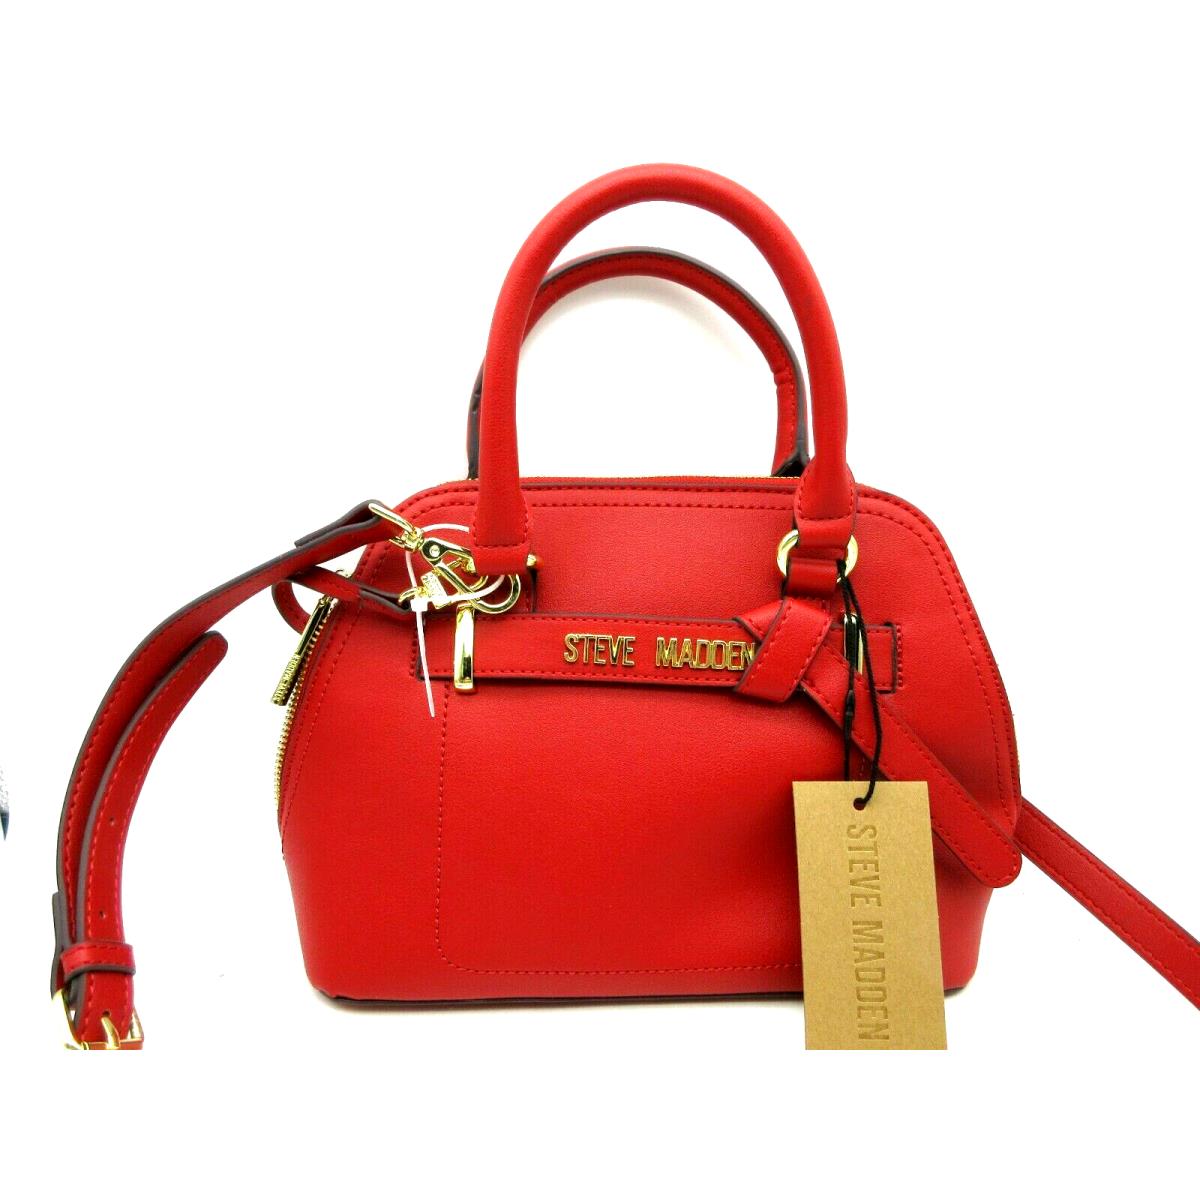 Steven Madden Crimson Bmishal Hand Purse Bag Crossbody Red W Strap Retail